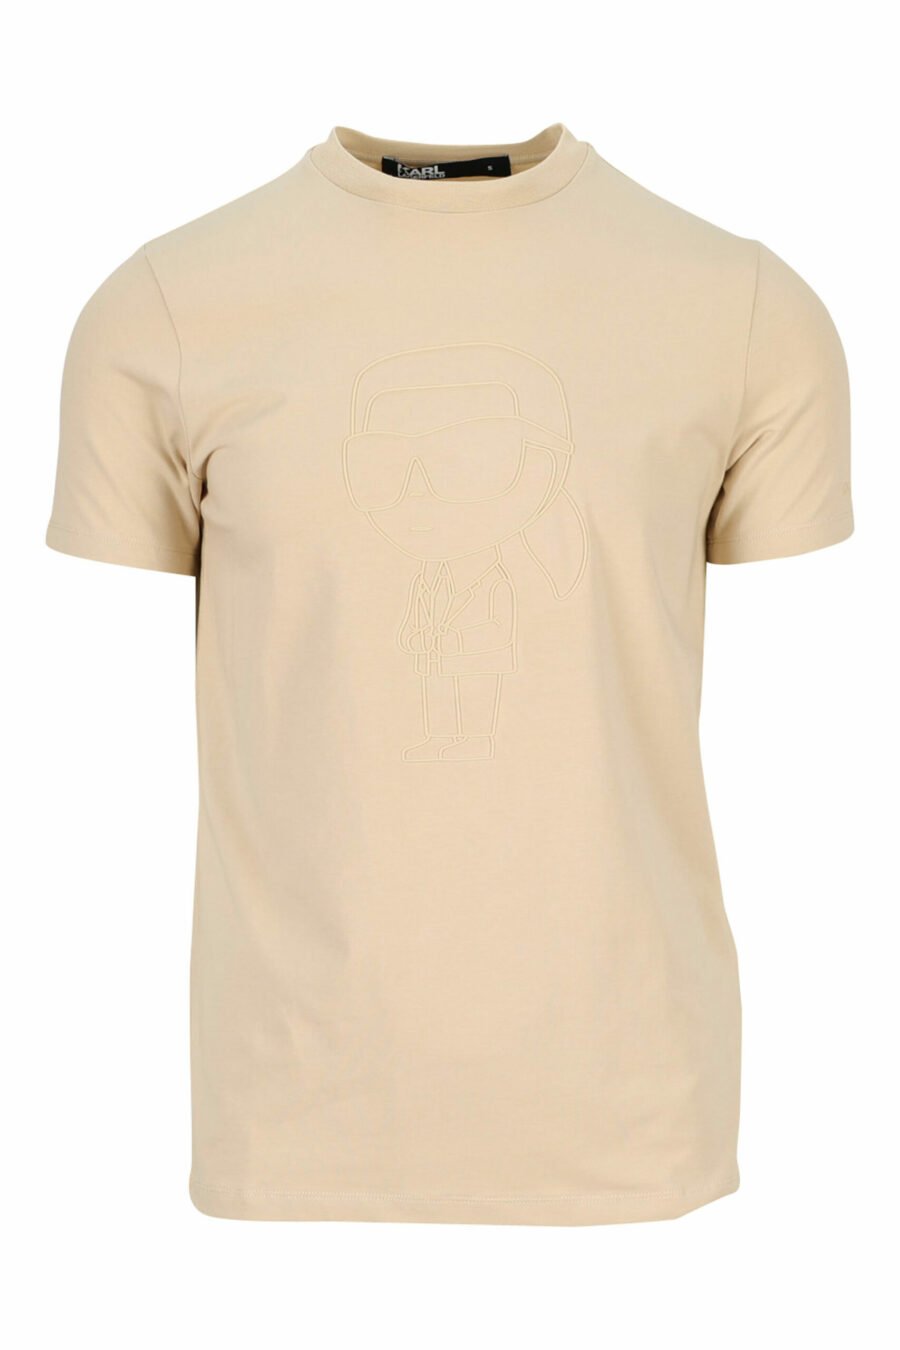 T-shirt bege com maxilogo monocromático emborrachado - 4062226401340 scaled